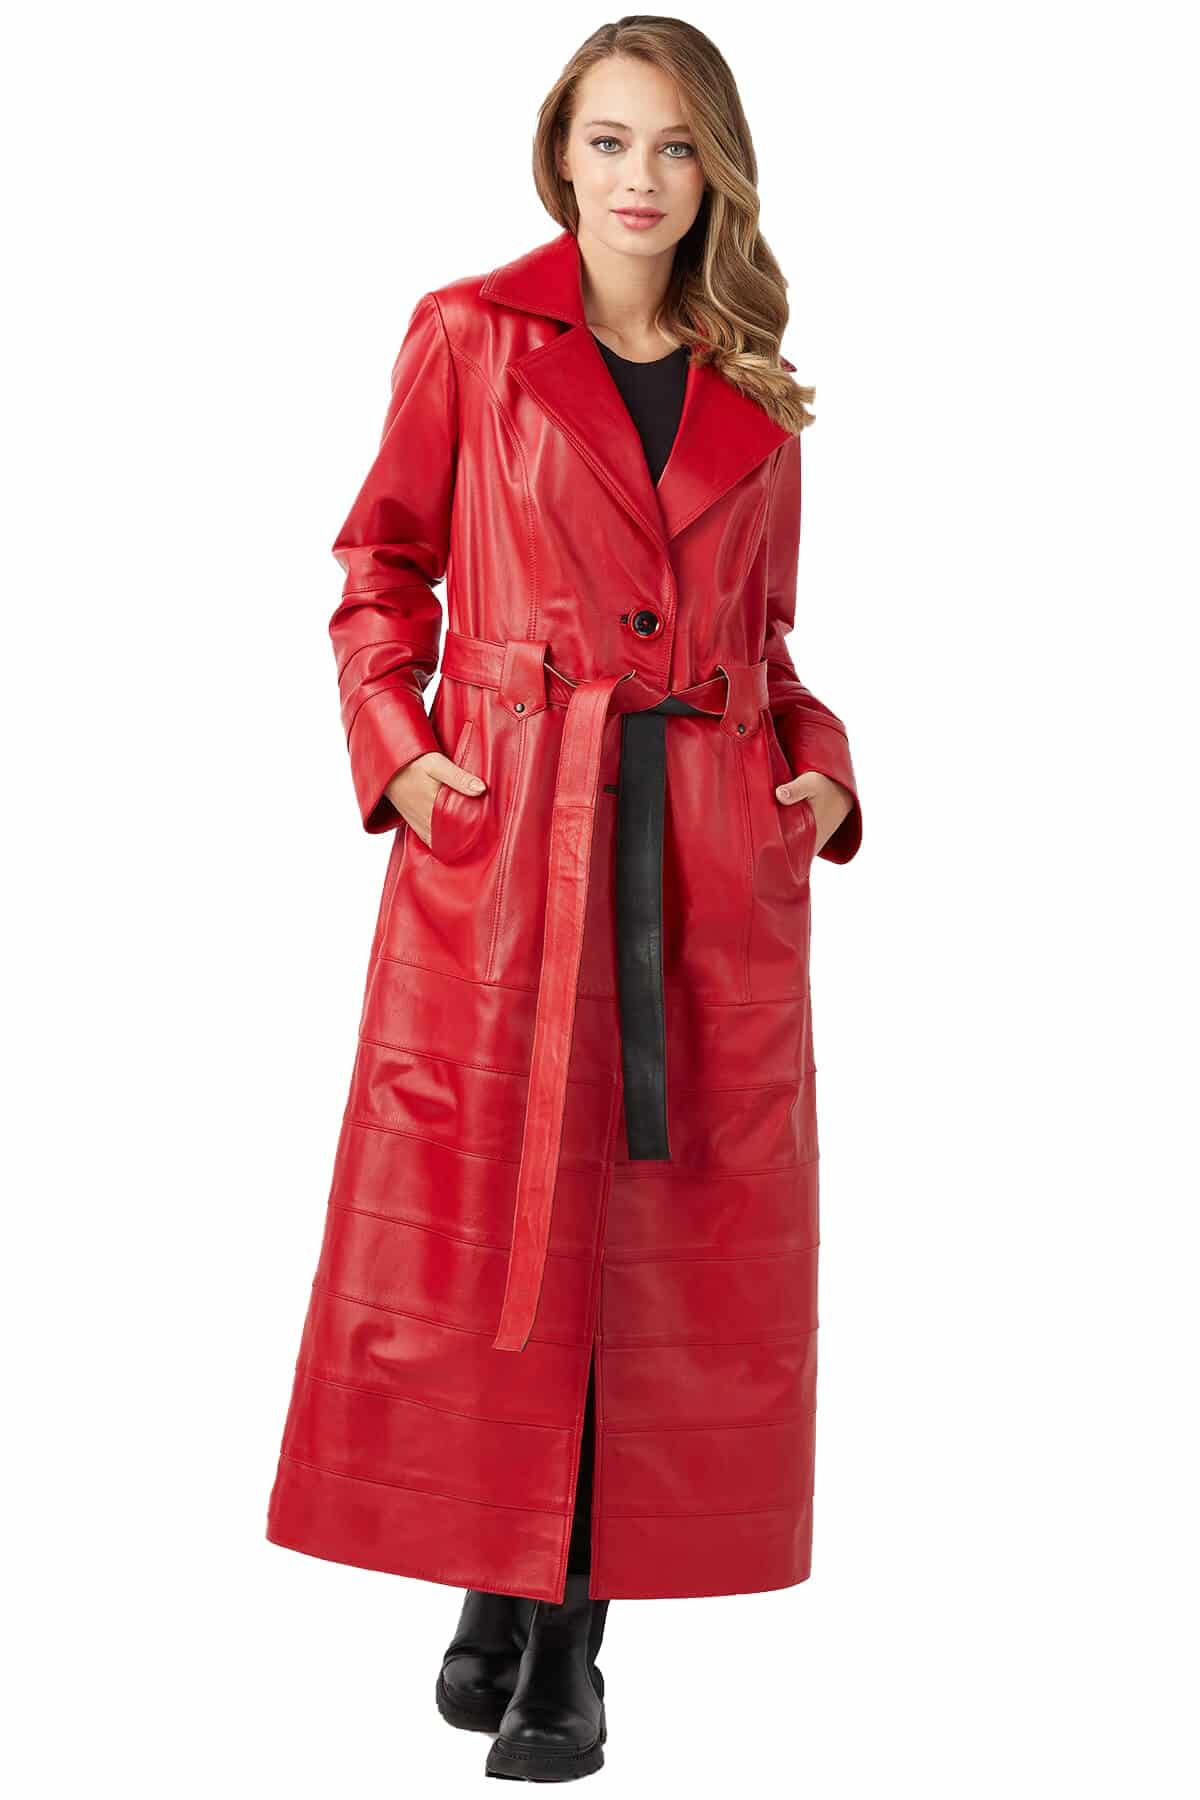 rita-genuine-leather-womens-topcoat-red-2